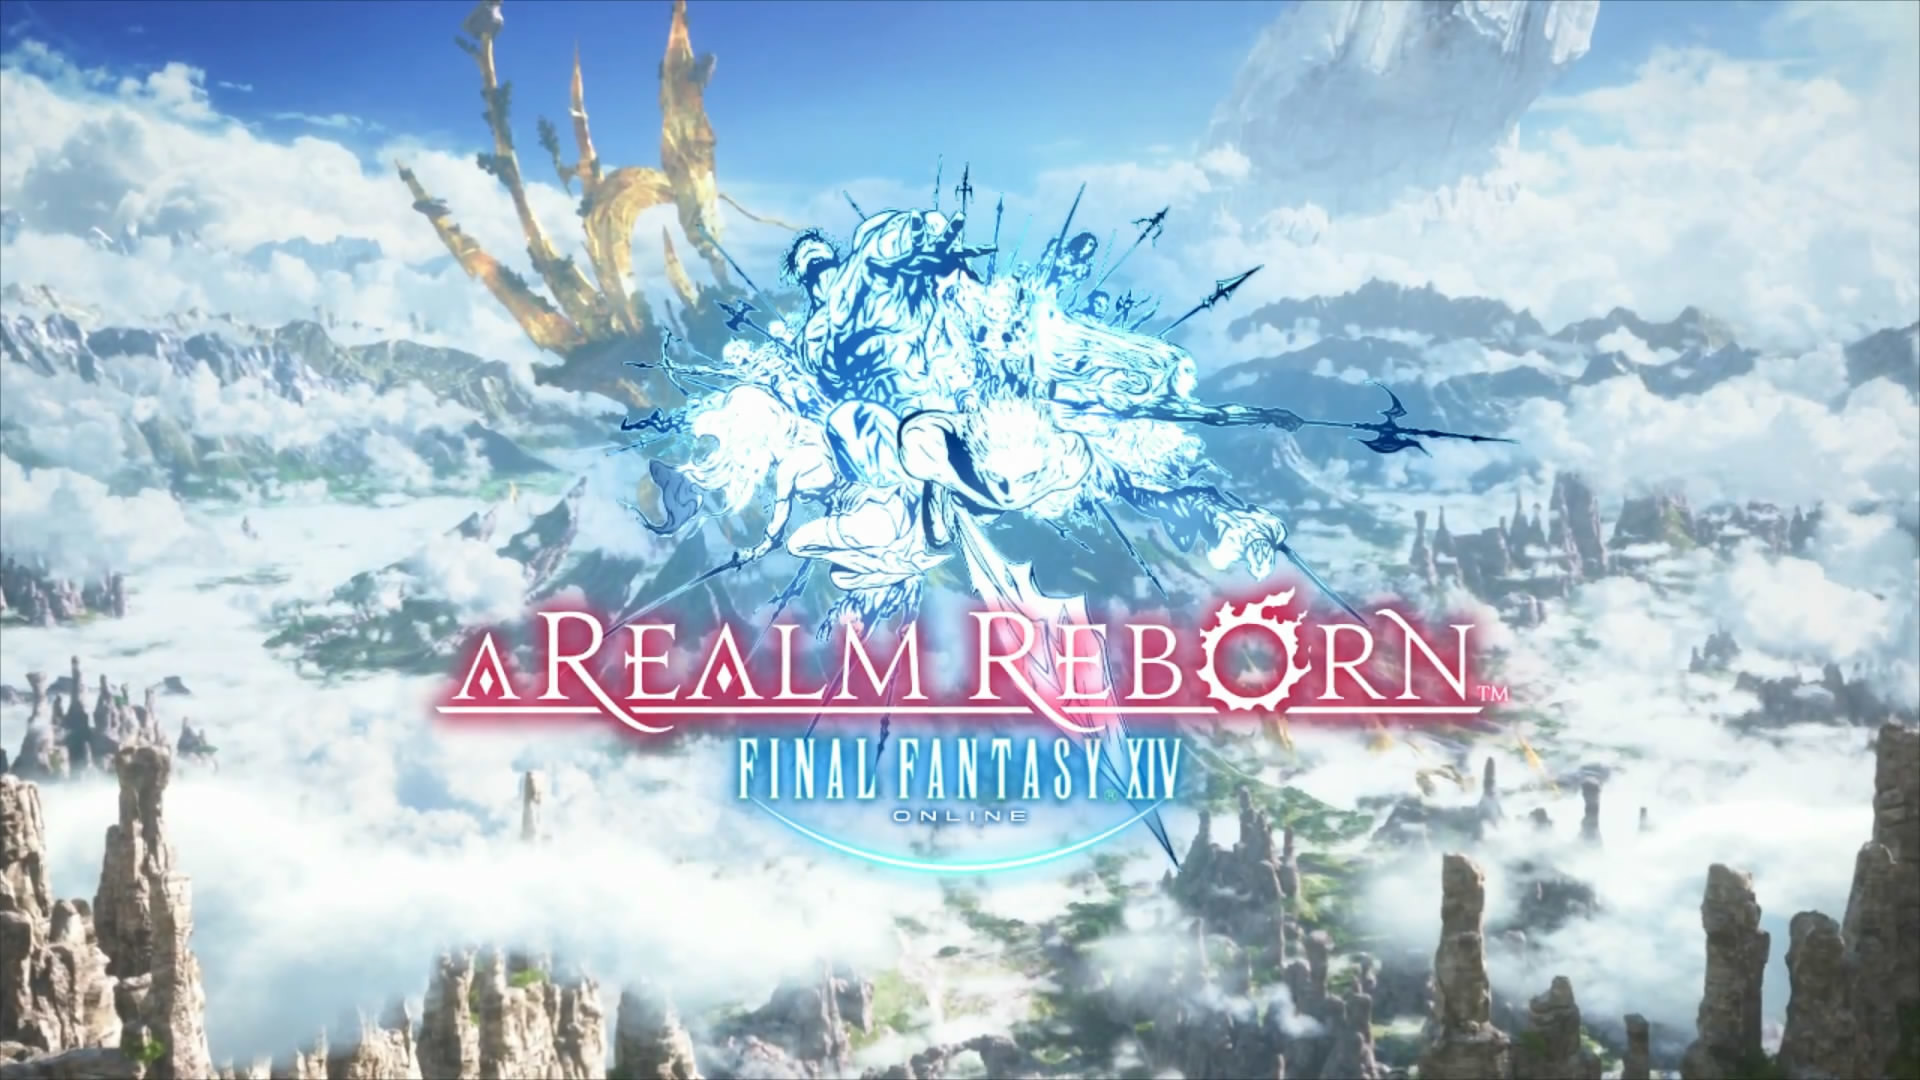 Final-Fantasy-XIV-A-Realm-Reborn-Wallpaper